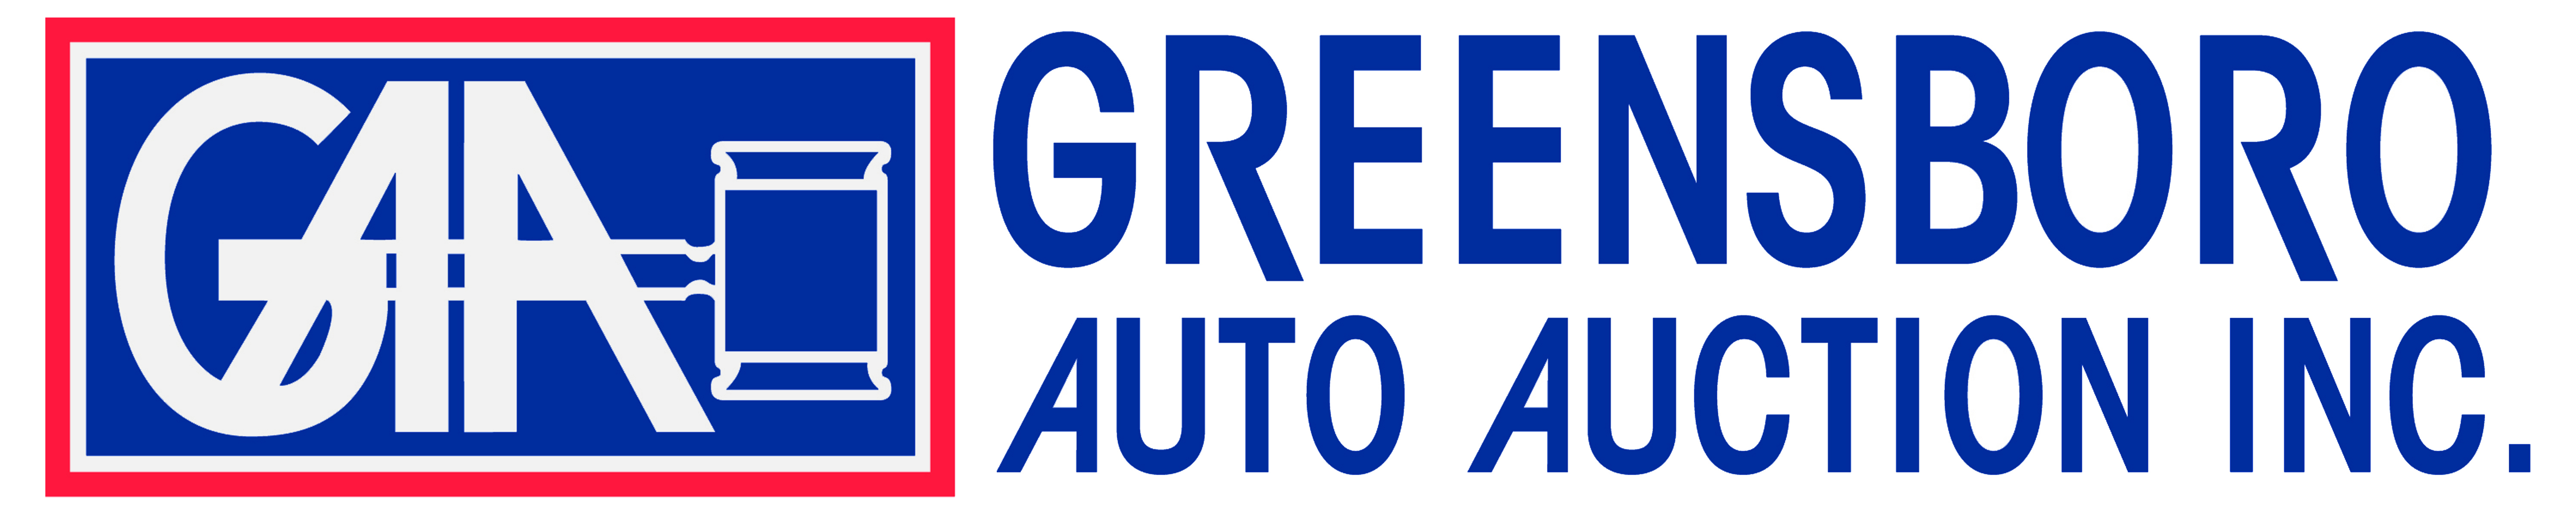 Greensboro auto auction logo